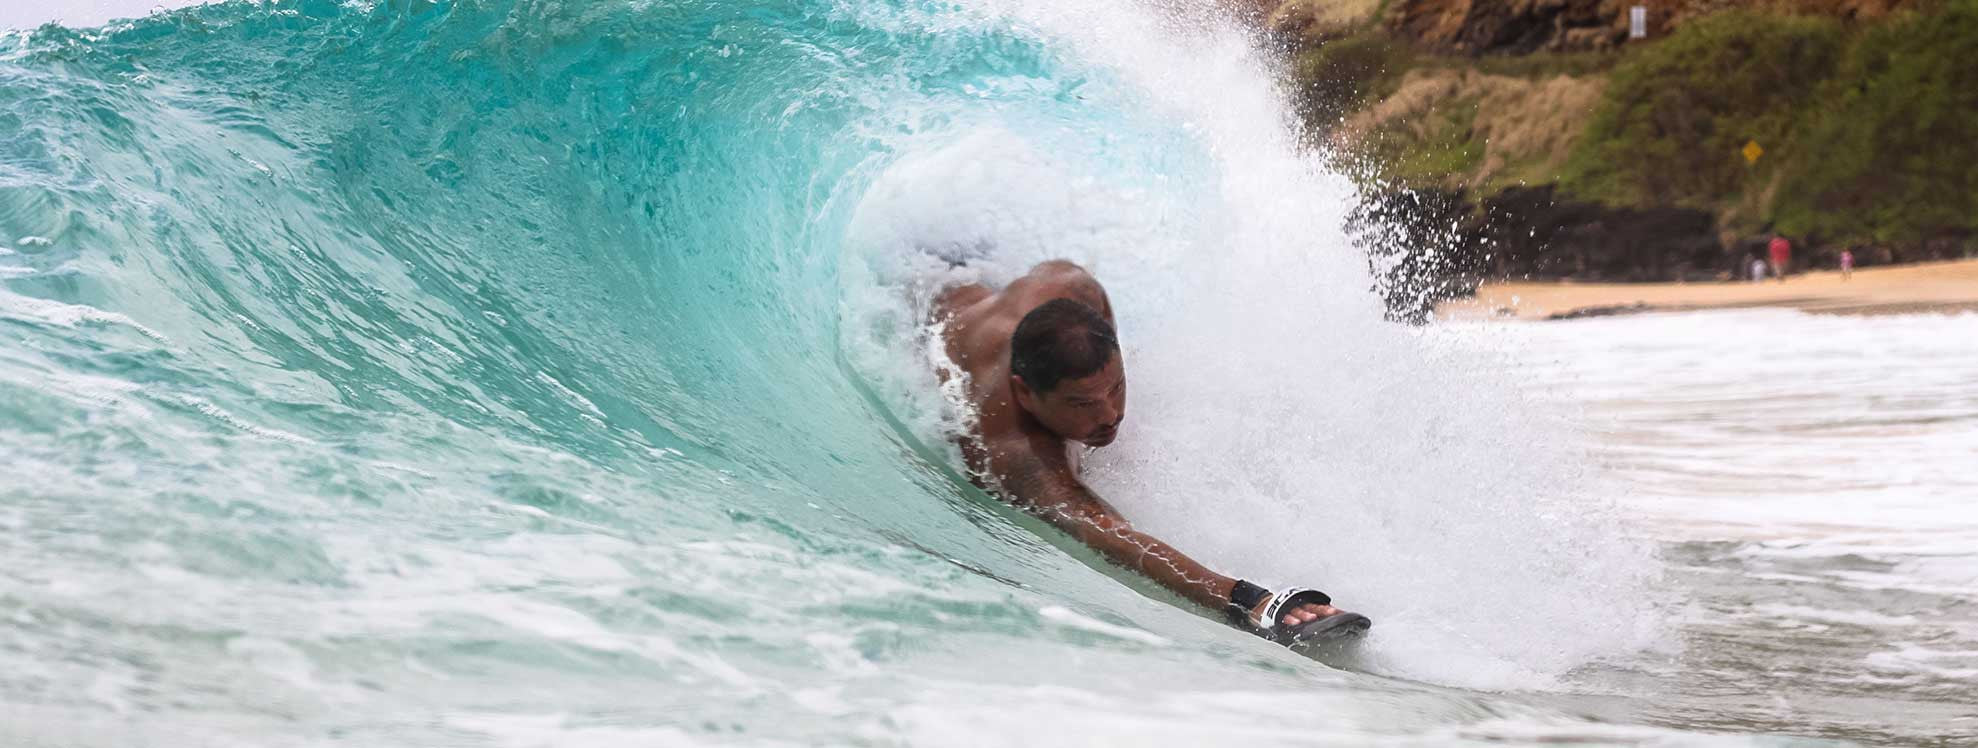 Sean Enoka On The Oahu Sandy's Beach Bodysurfing Competition